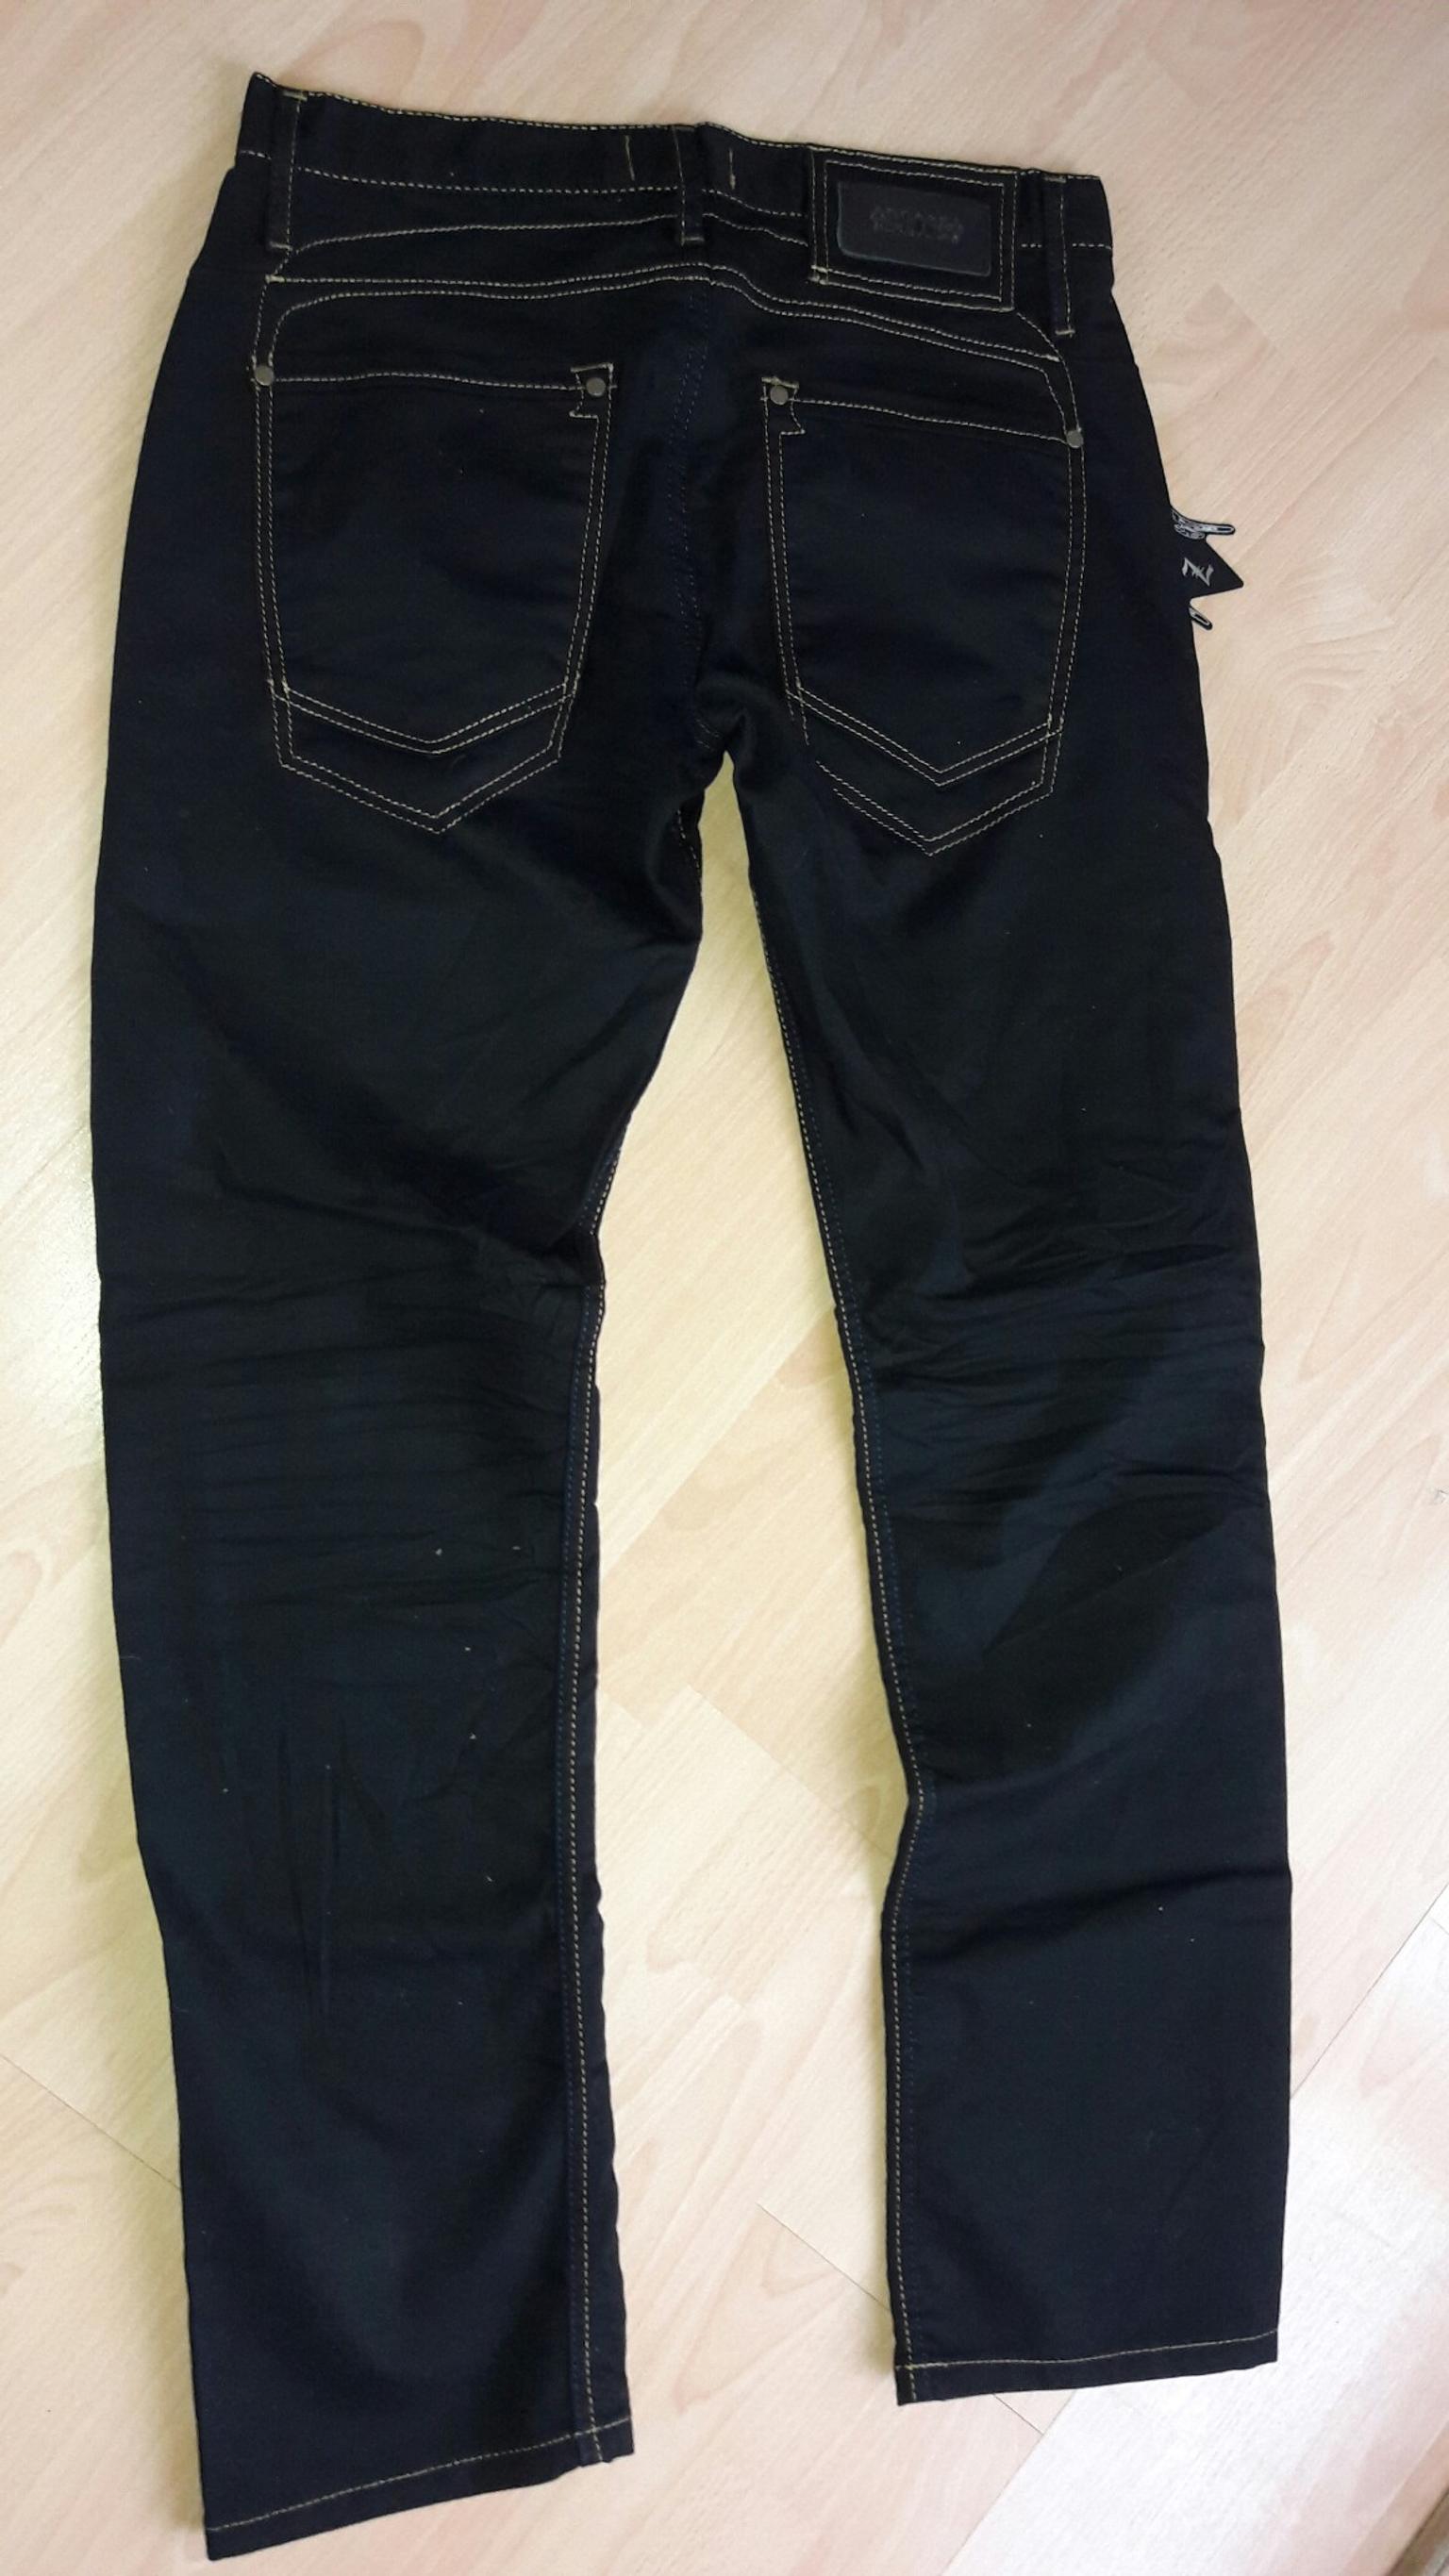 Kingz Jeans Hose Manner In 6973 Hochst For 35 00 For Sale Shpock